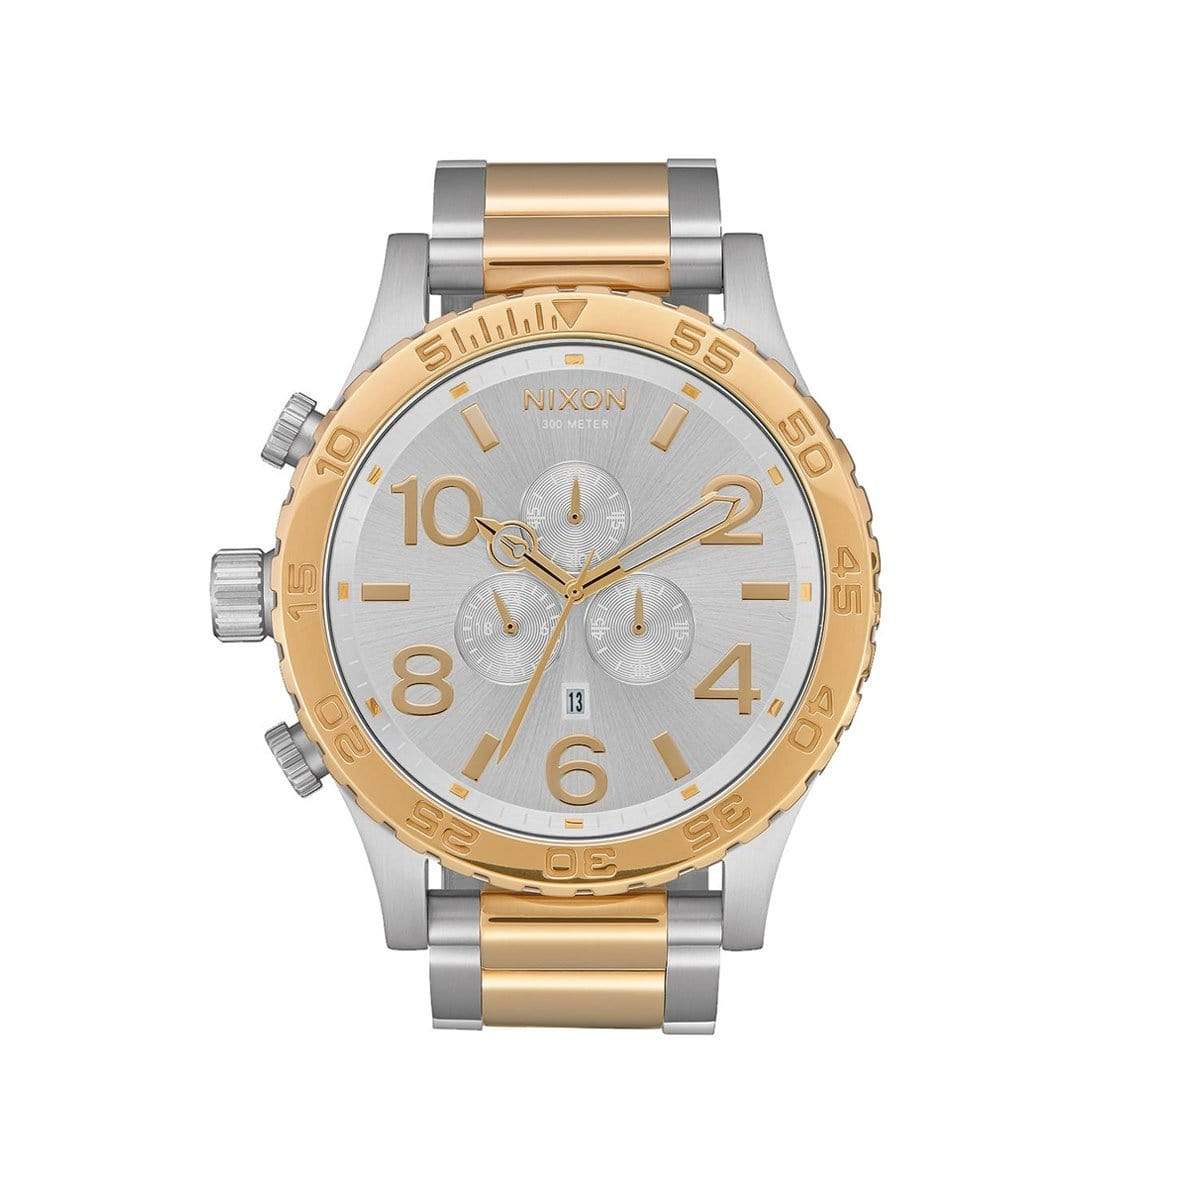 Silver/Gold Custom Nixon 51-30 Chrono Watch